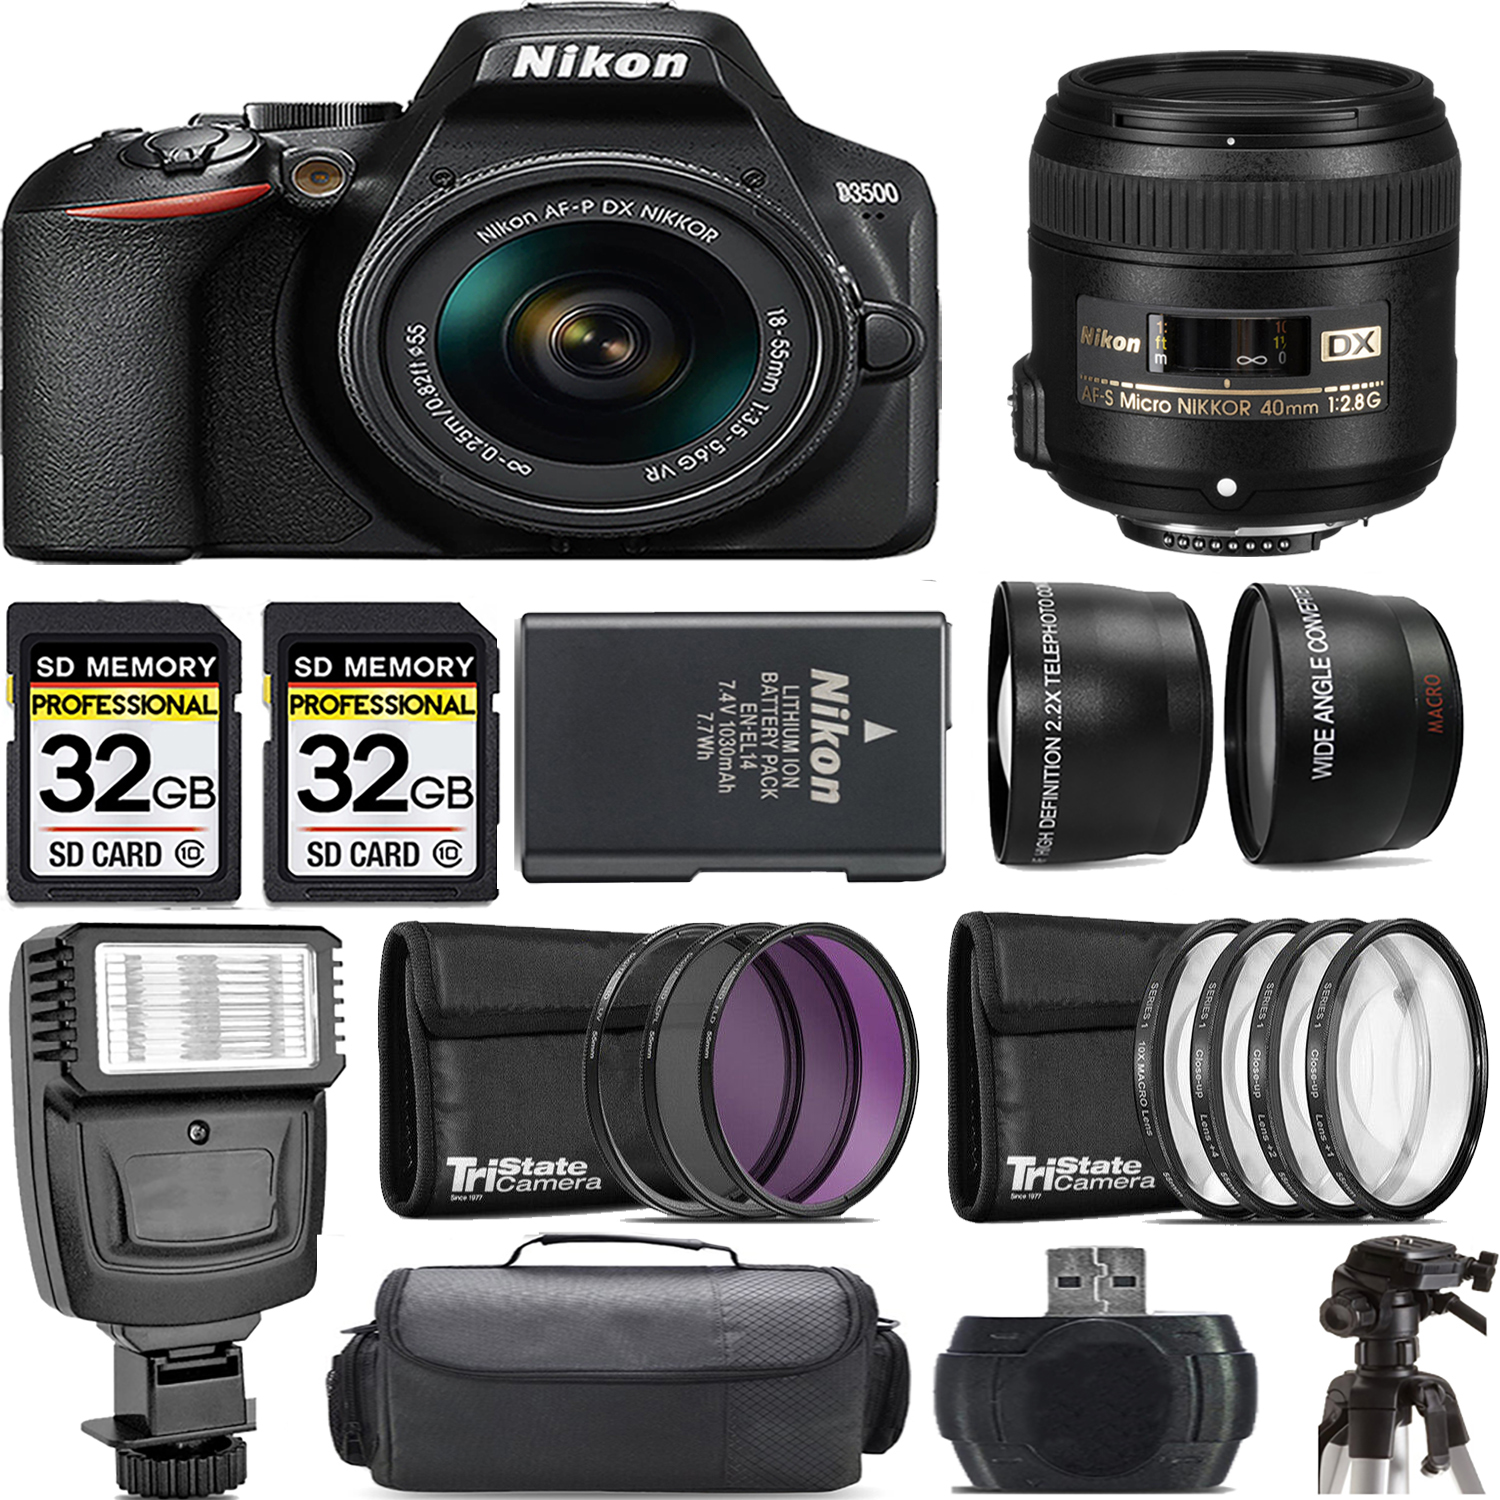 D3500 DSLR Camera with 18-55mm Lens + 40mm Lens + Flash - Kit *FREE SHIPPING*